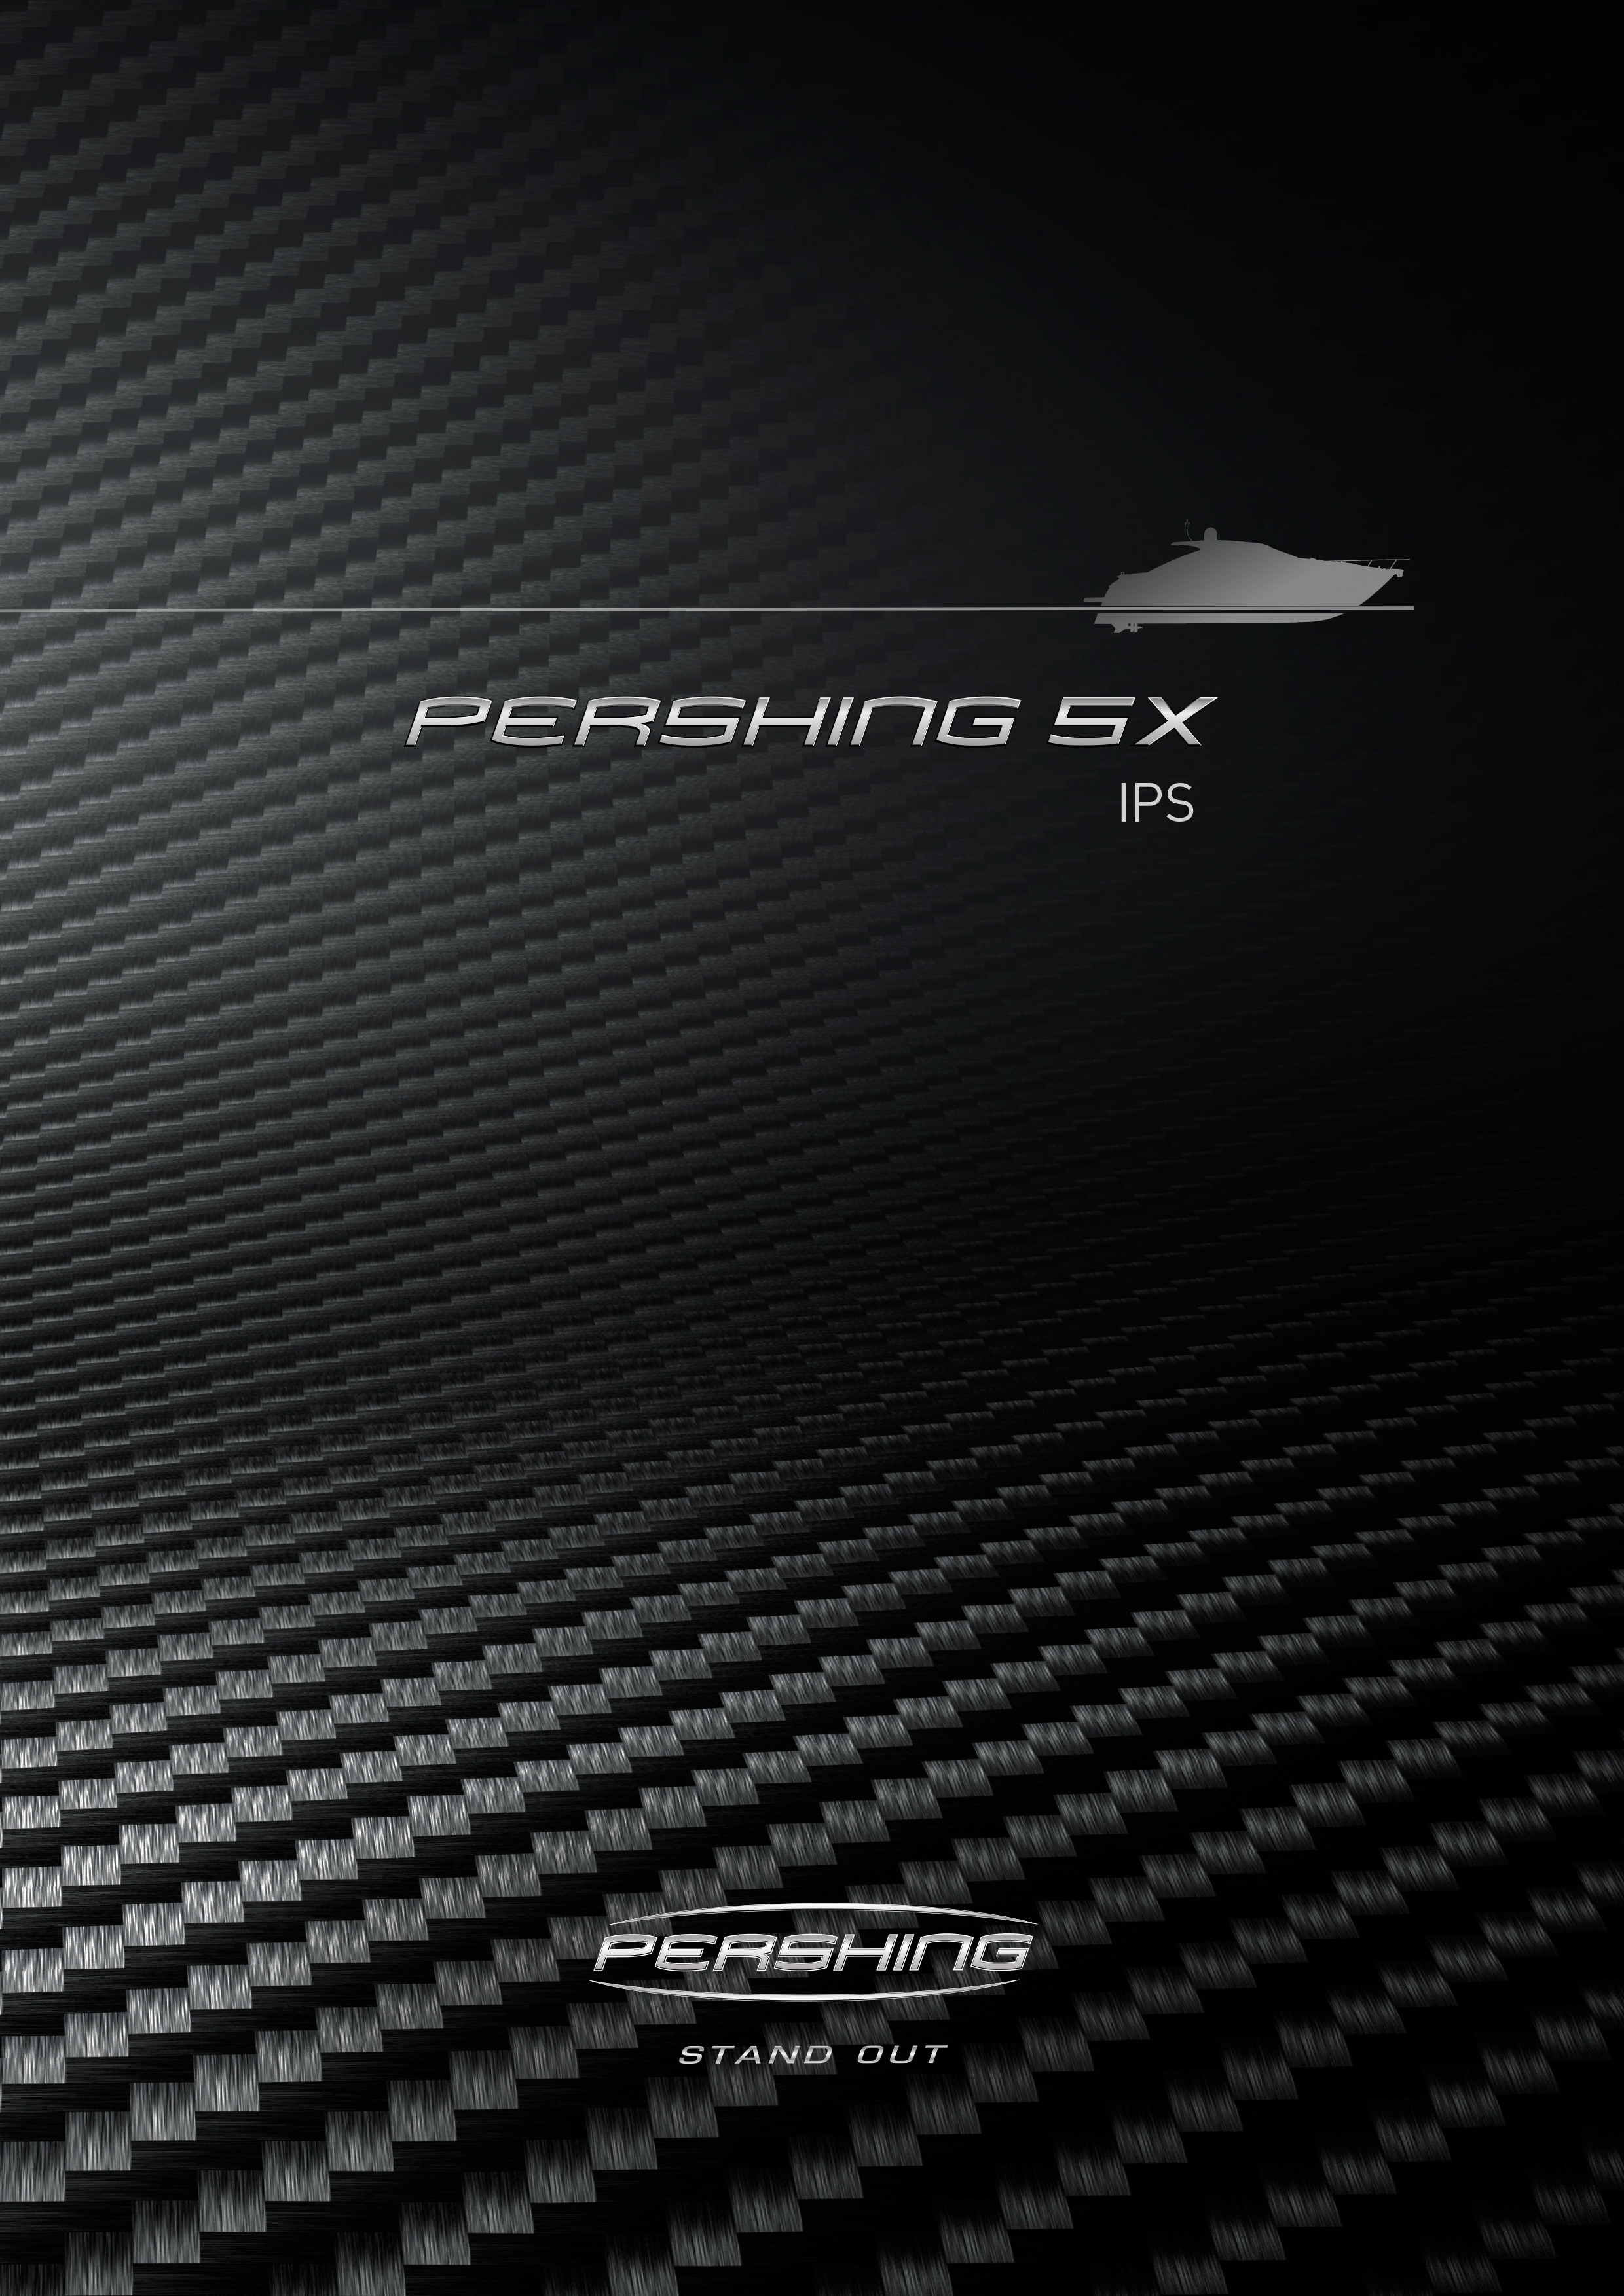 Pershing 5X Equipment